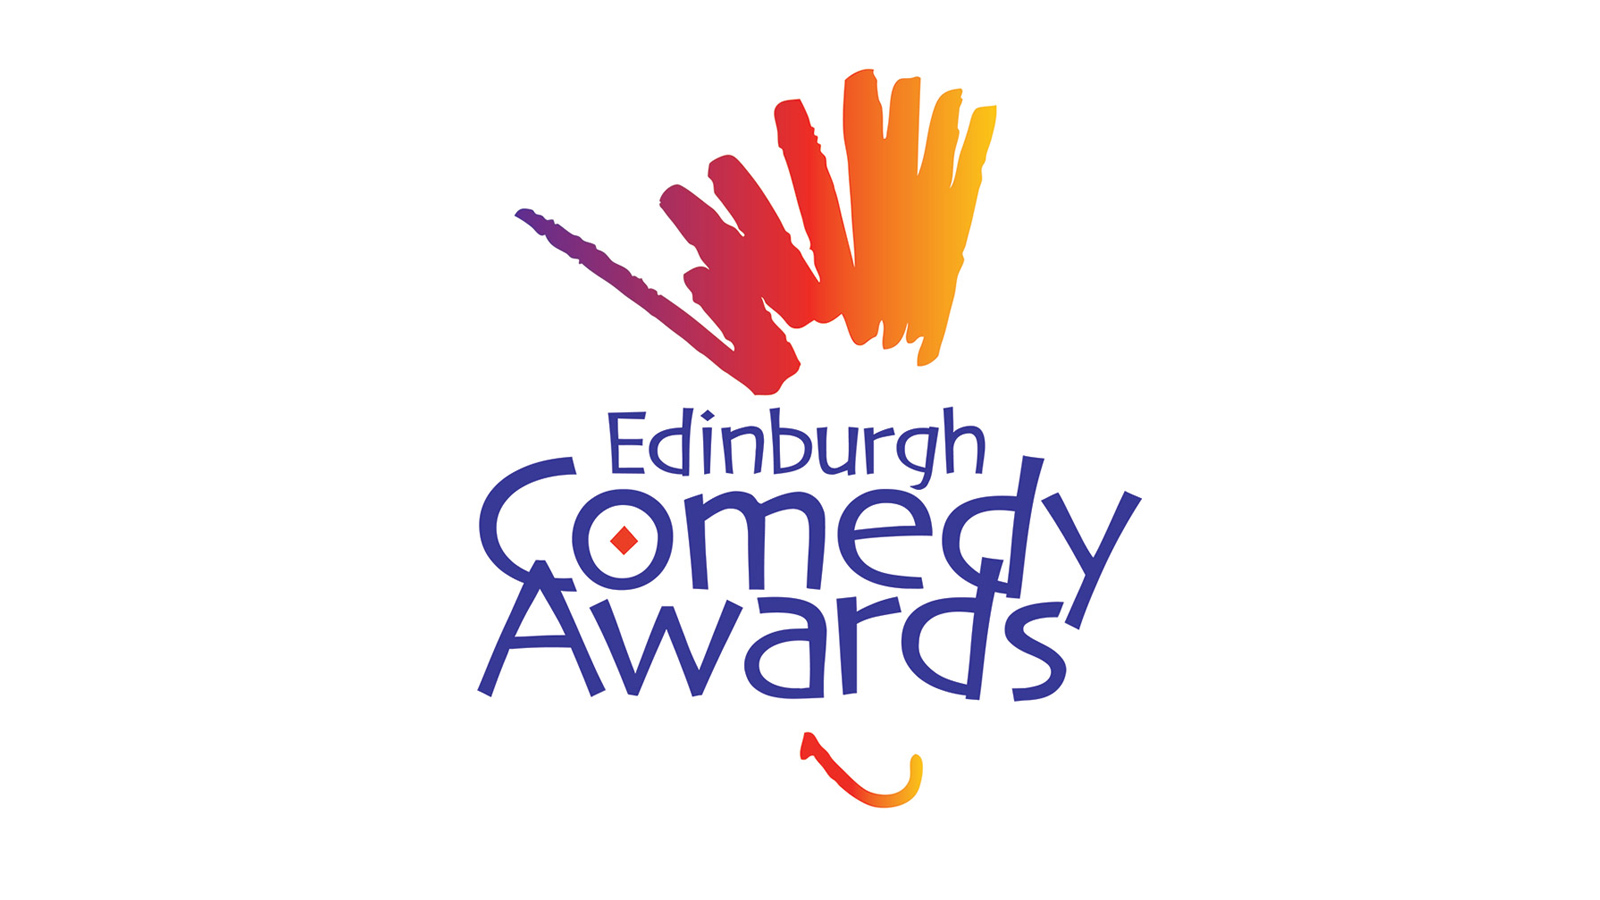 Videos Edinburgh Comedy Awards